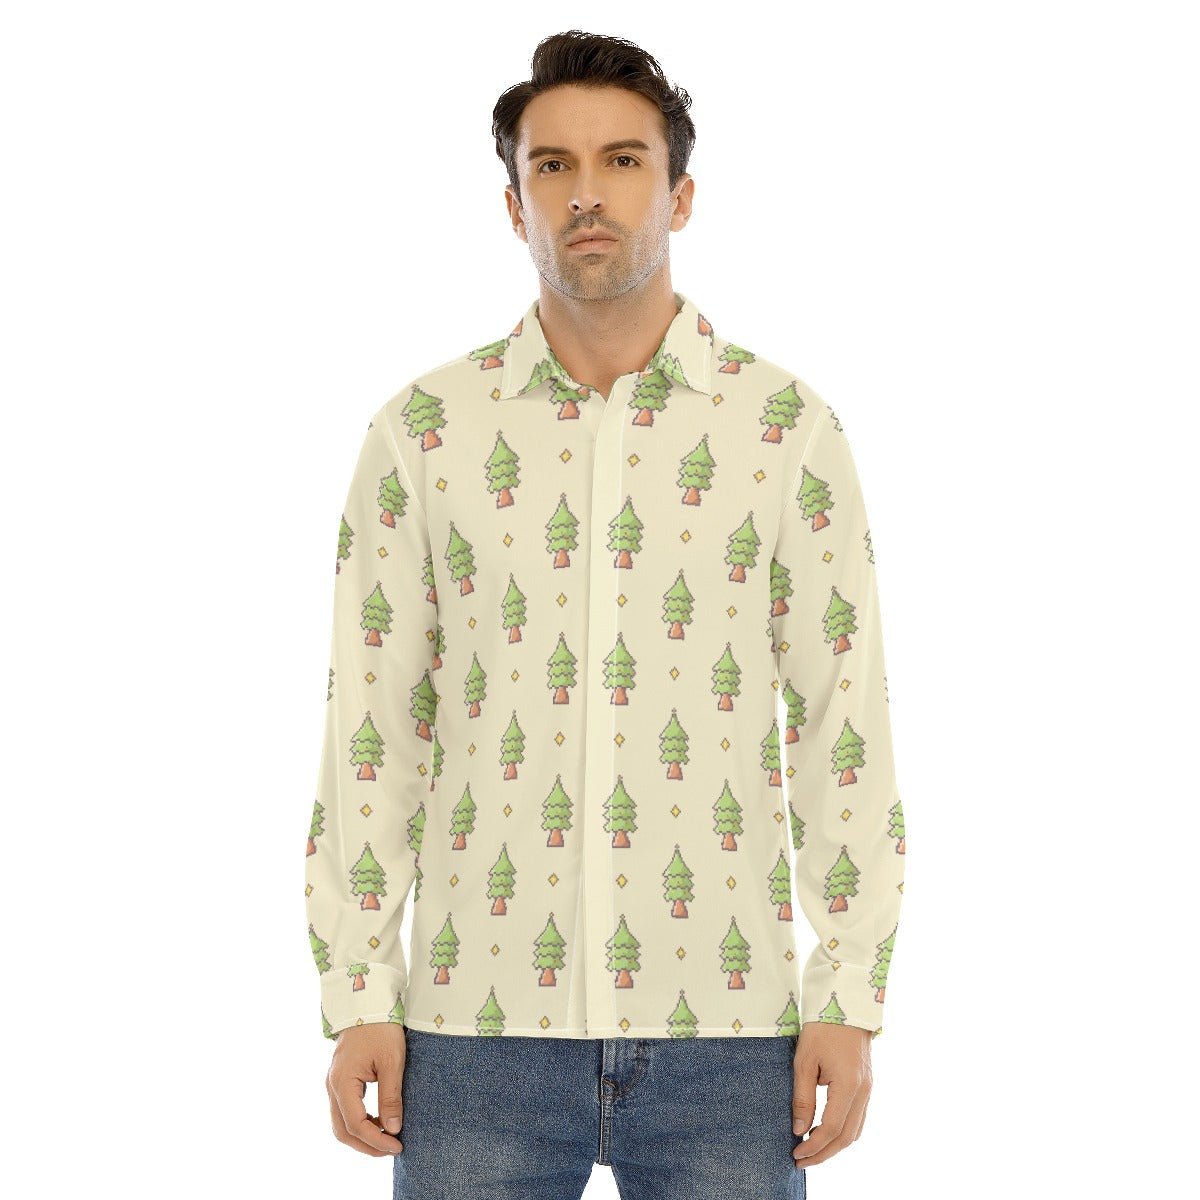 Men's Collar Christmas Shirt- 16-Bit Christmas Trees - Festive Style